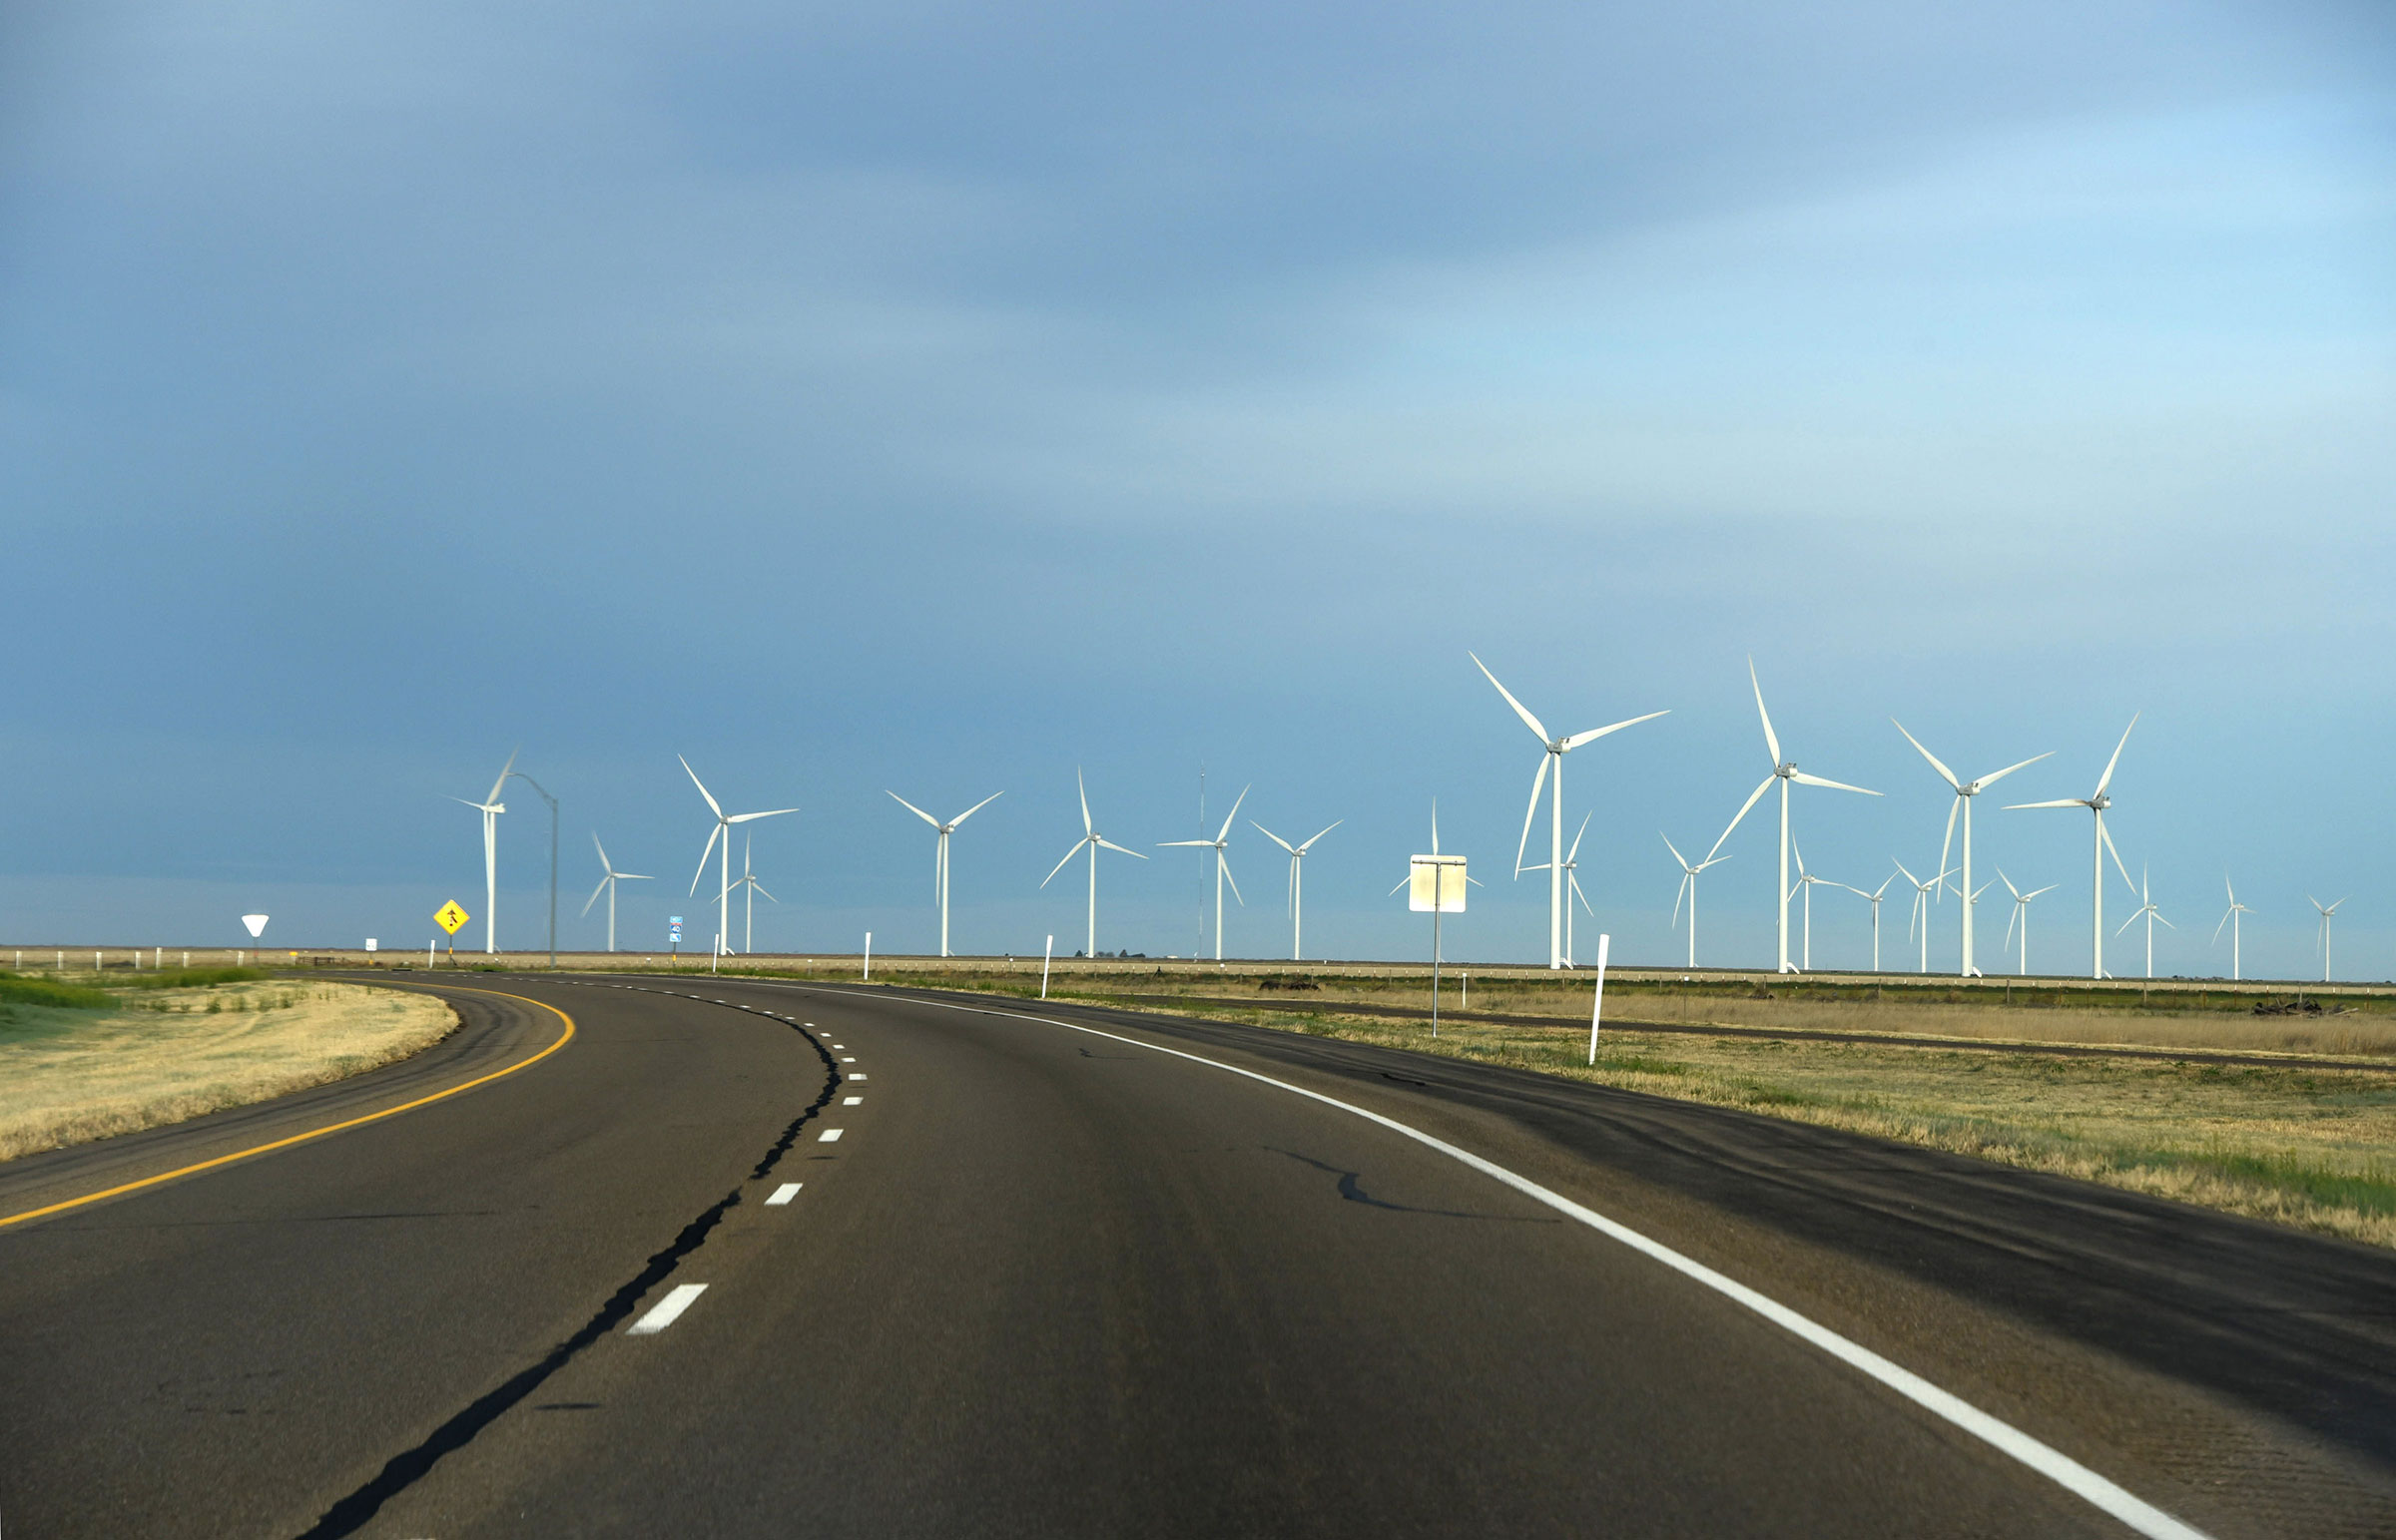 A wind farm in Adrian, TX on April 2, 2019. (Paul Harris—Getty Images)